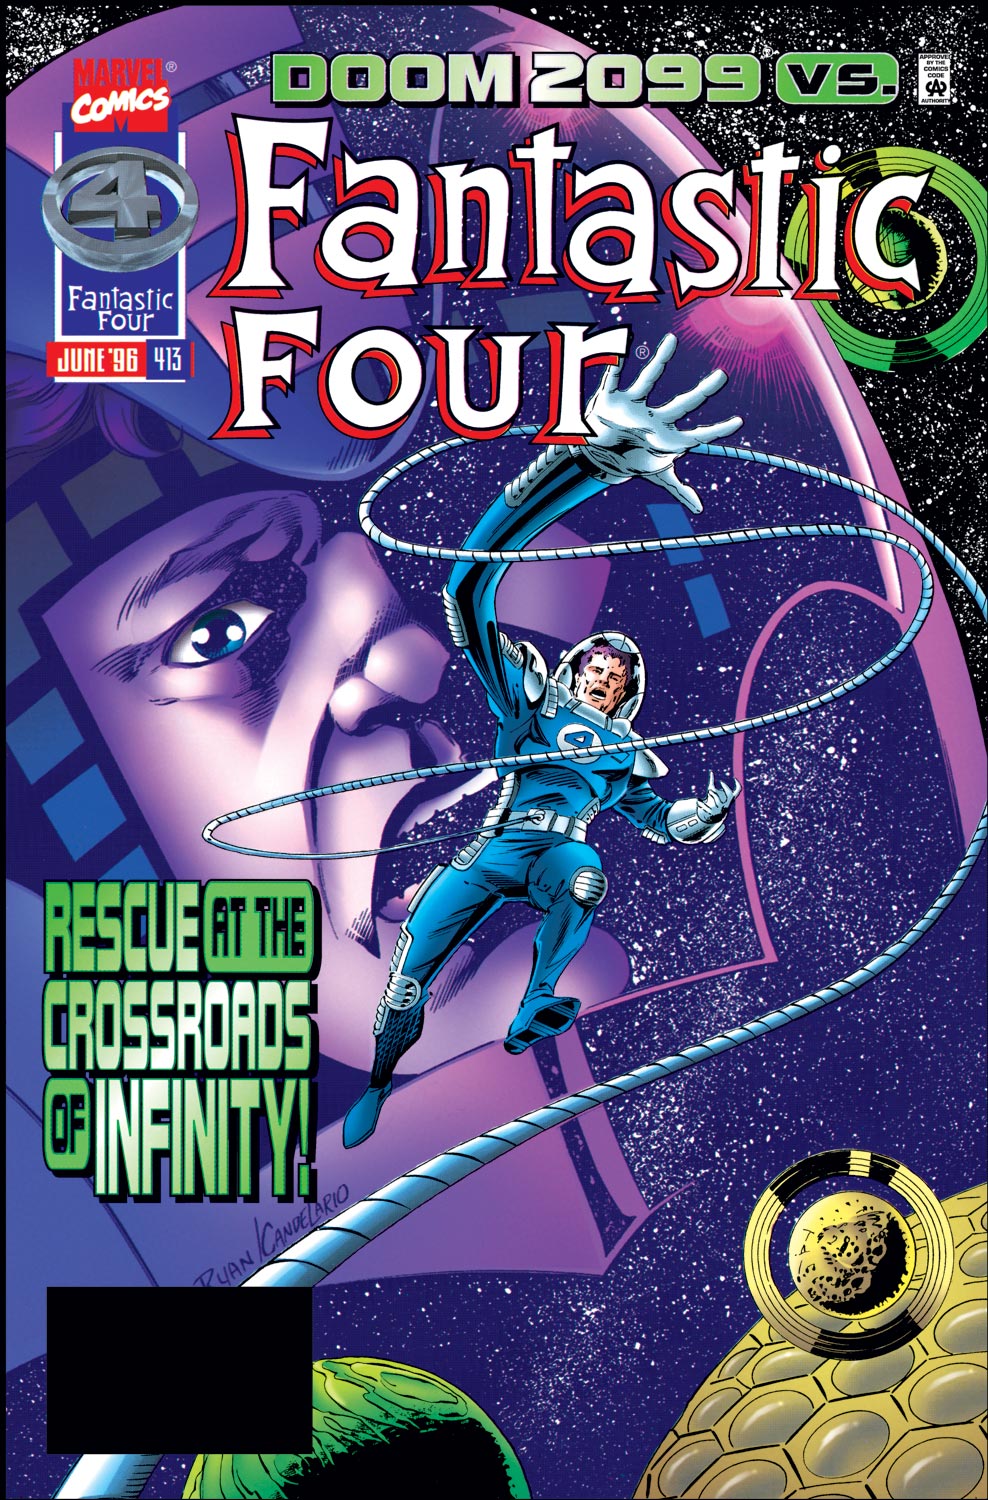 Fantastic Four (1961) #413